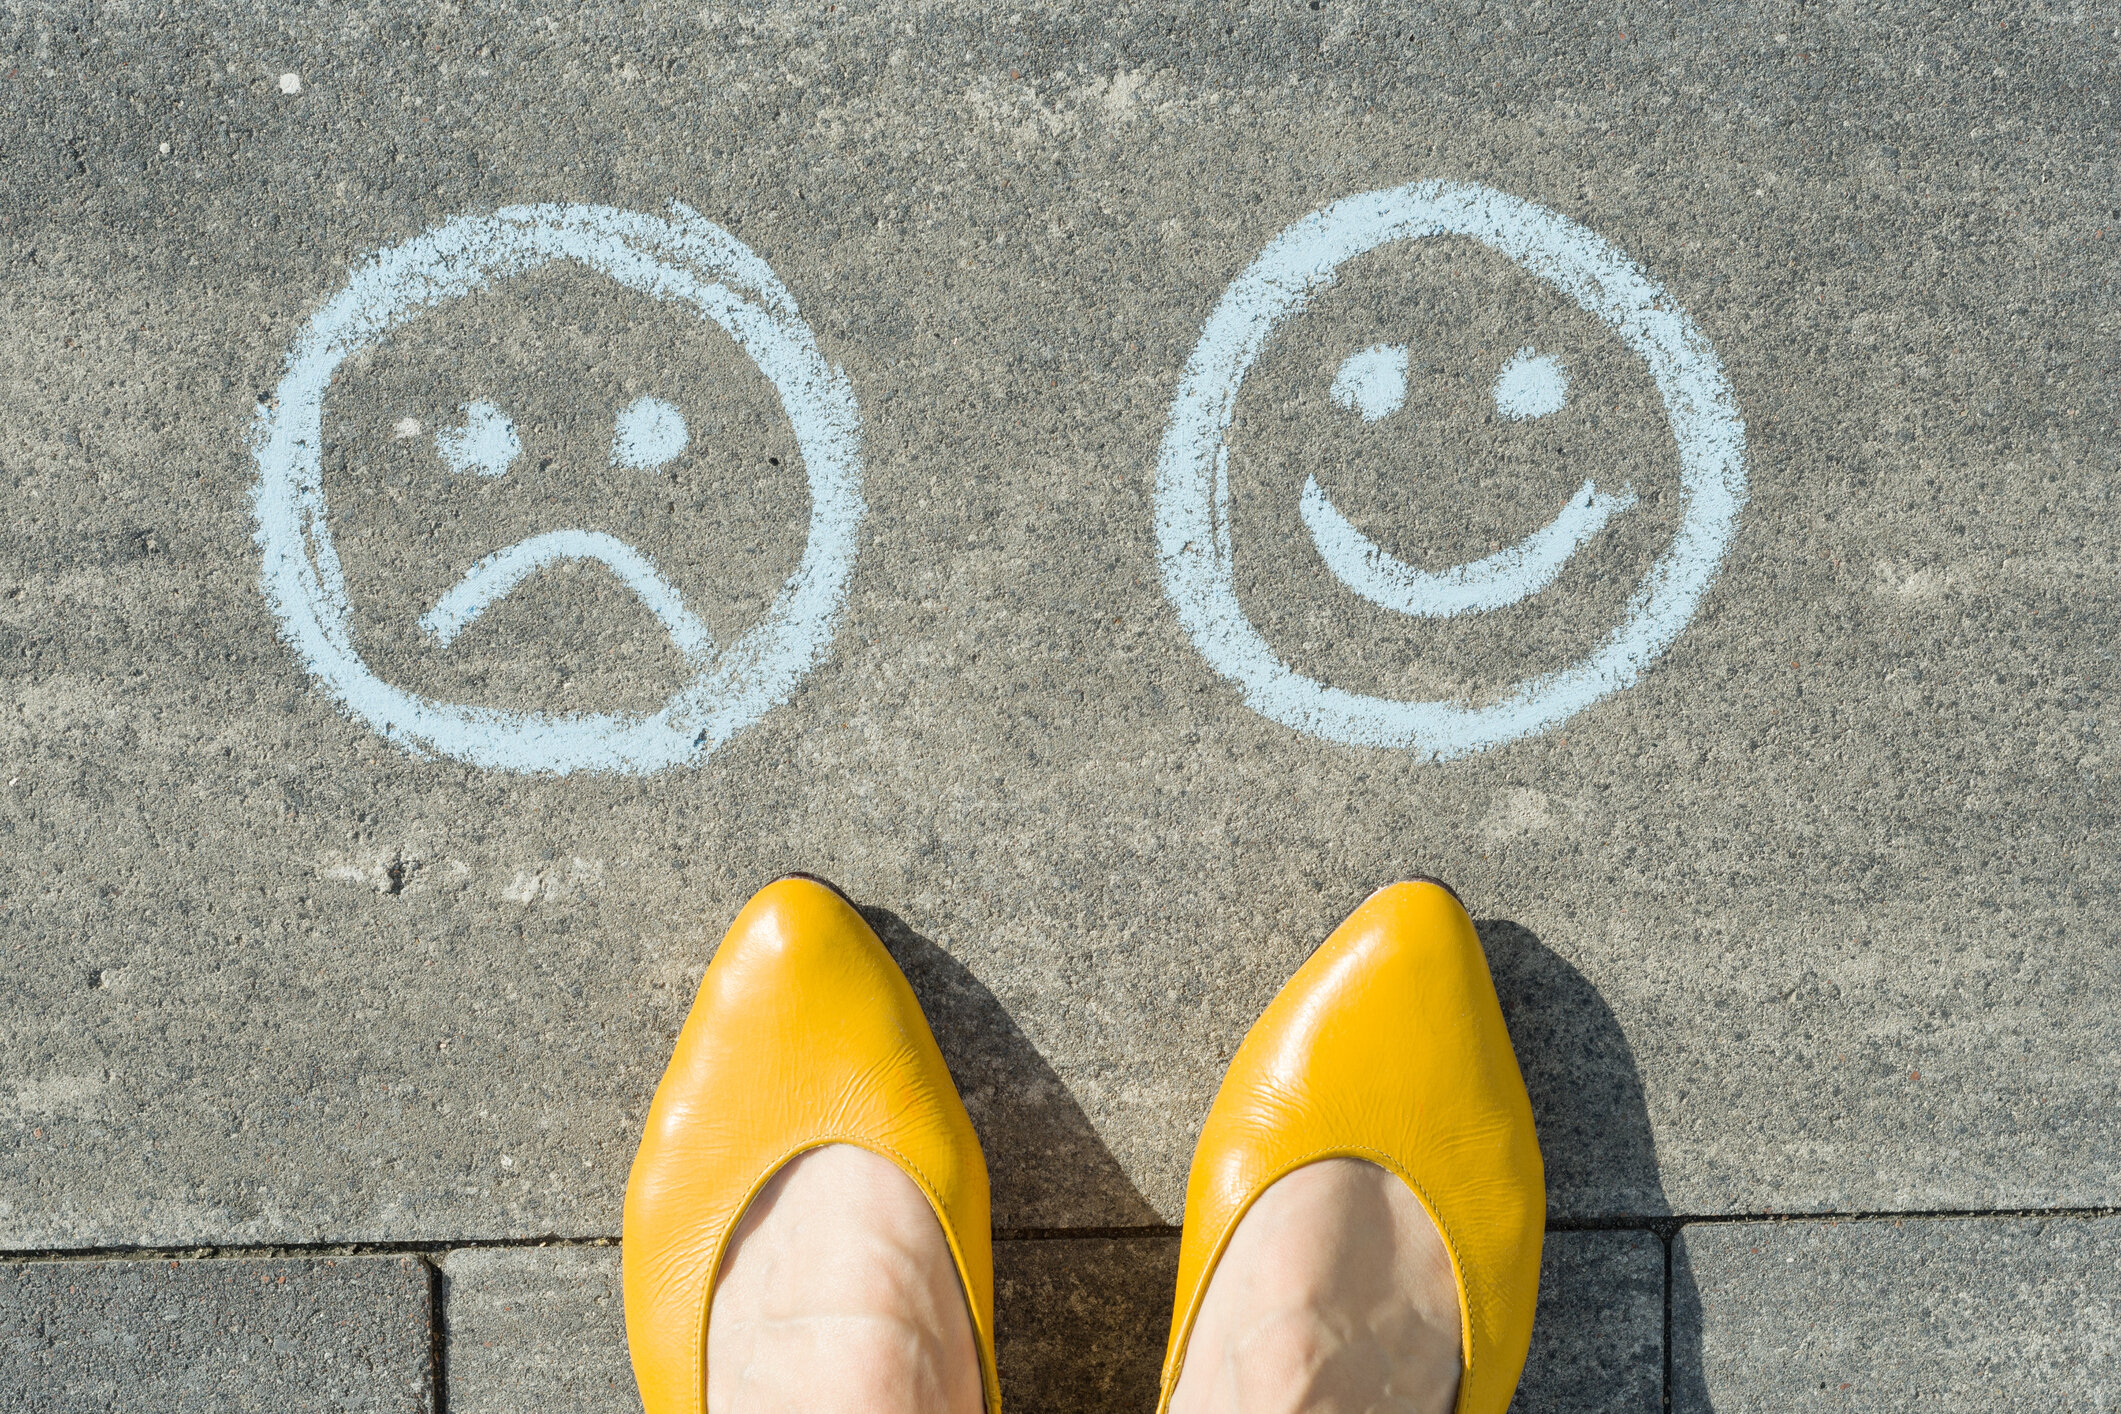 Choice - Happy Smileys or Unhappy, text on asphalt road.